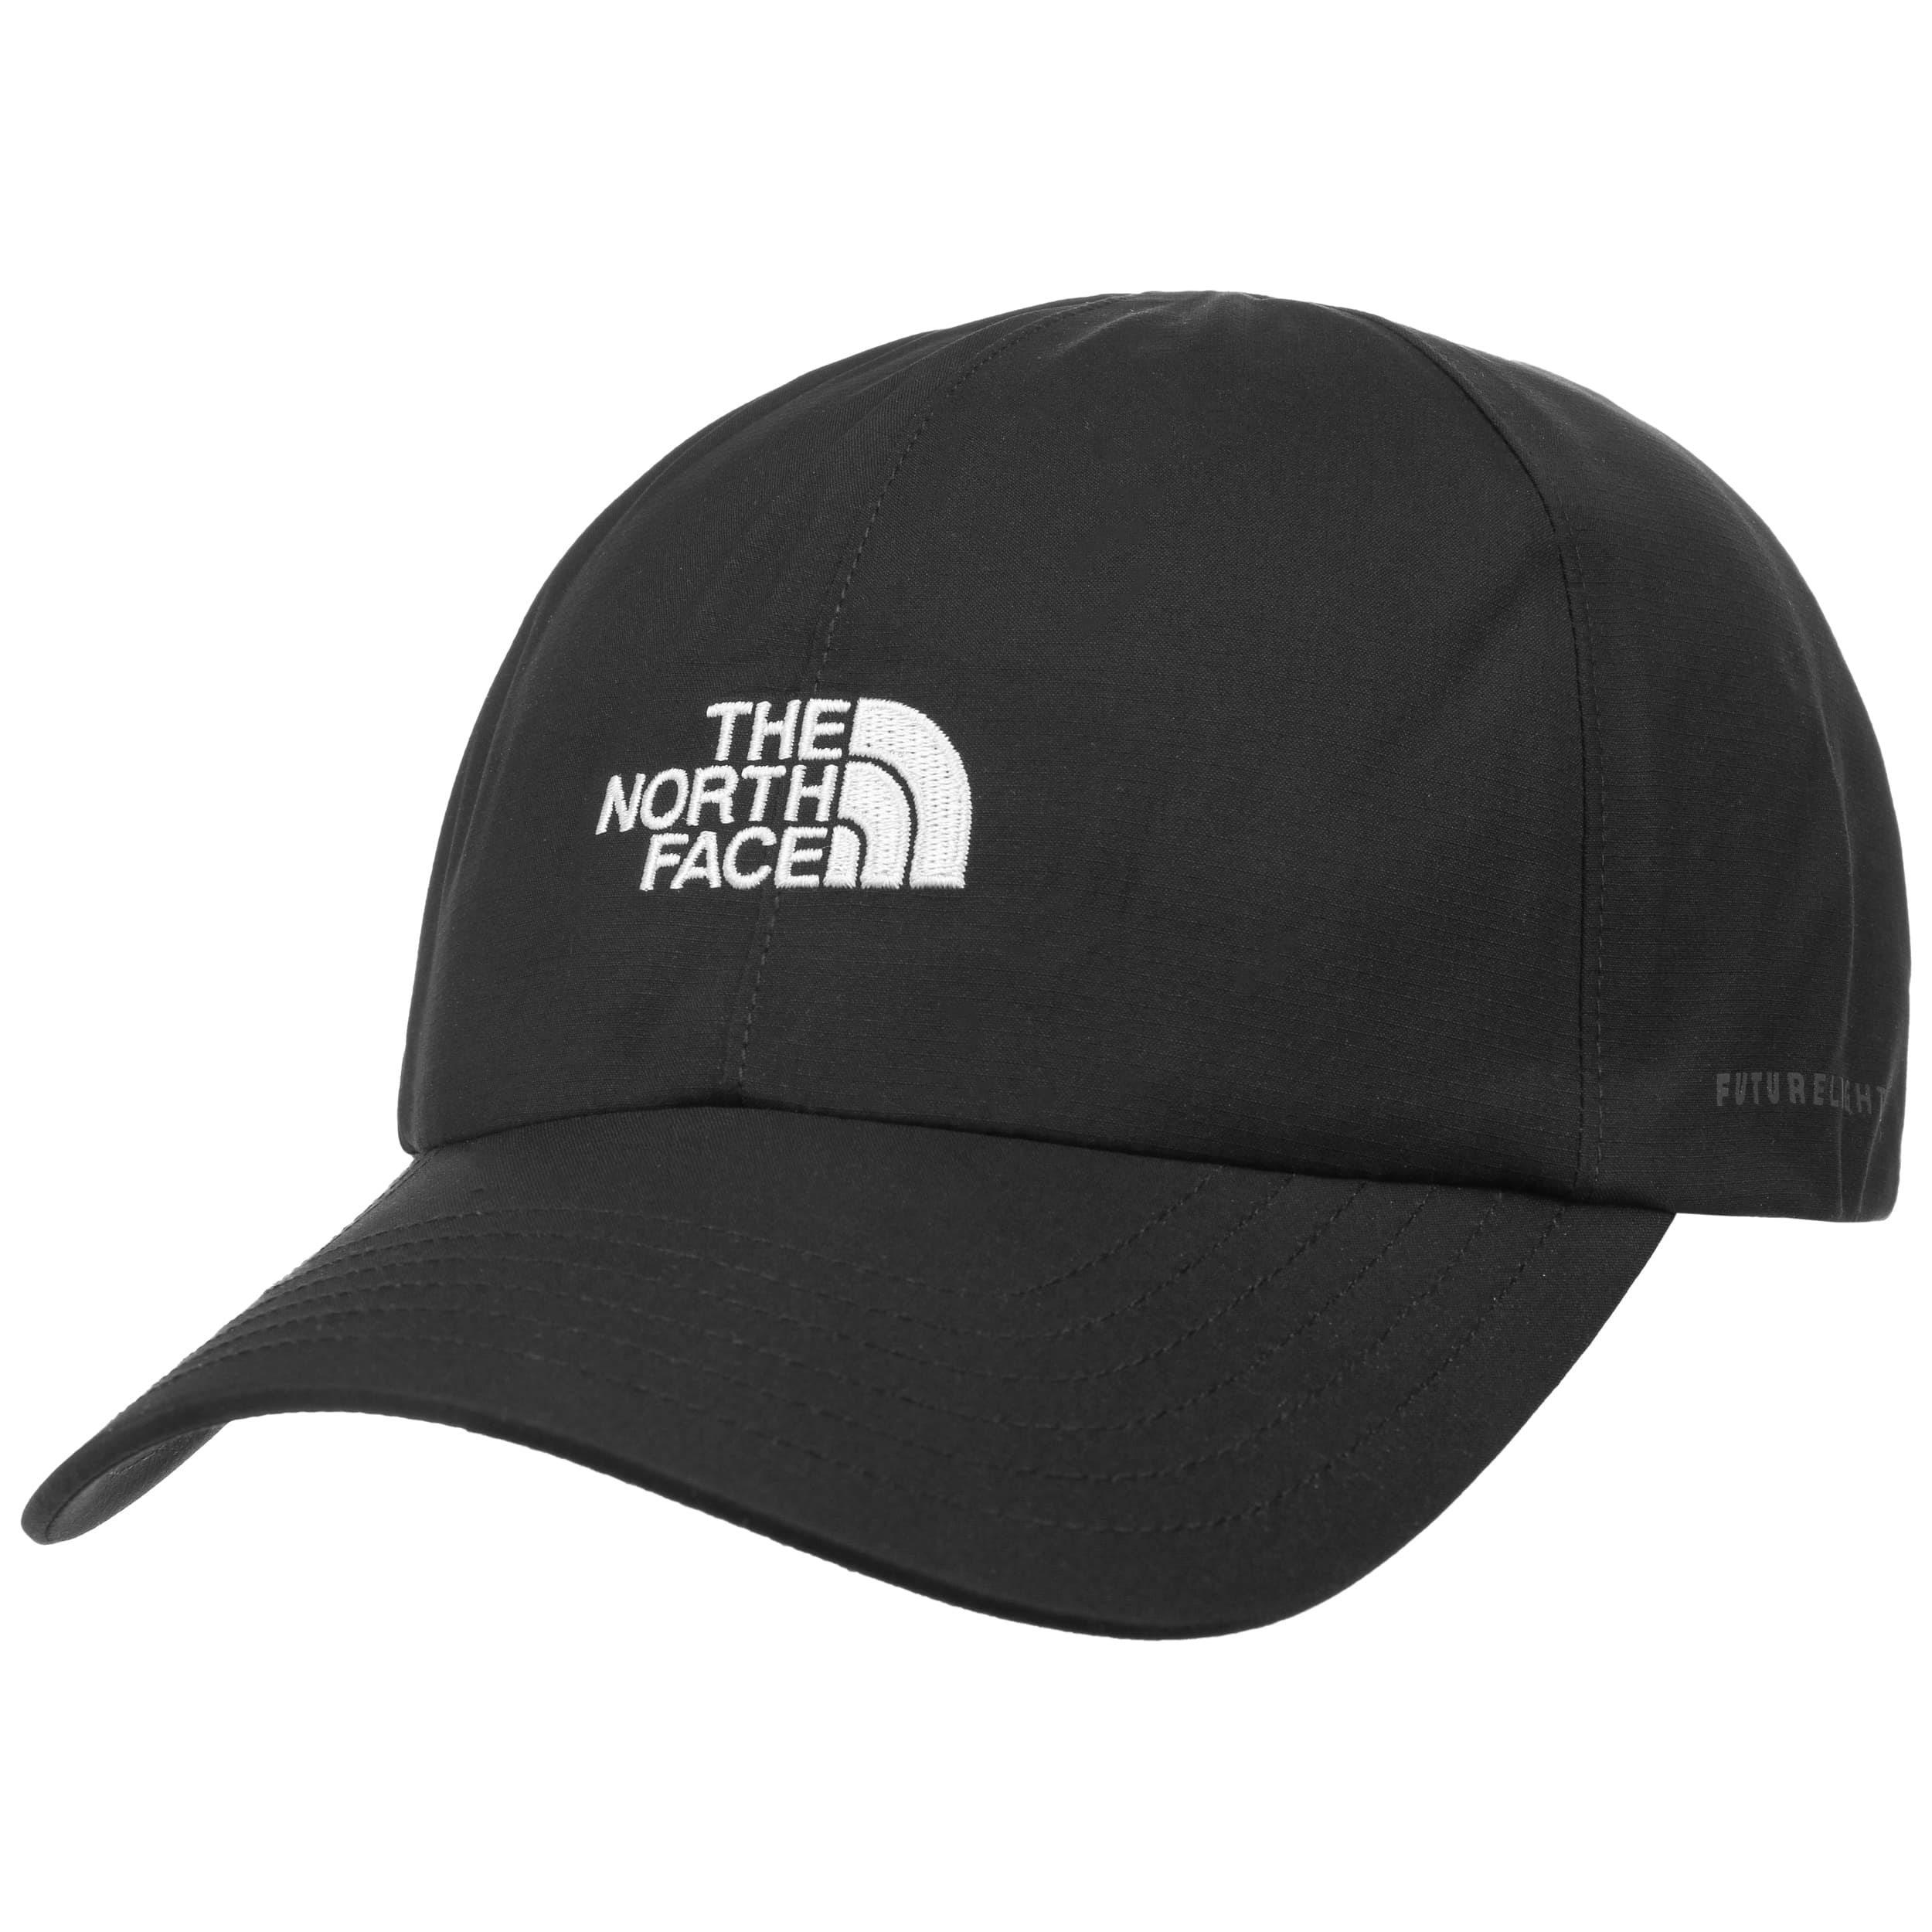 north face men's baseball caps